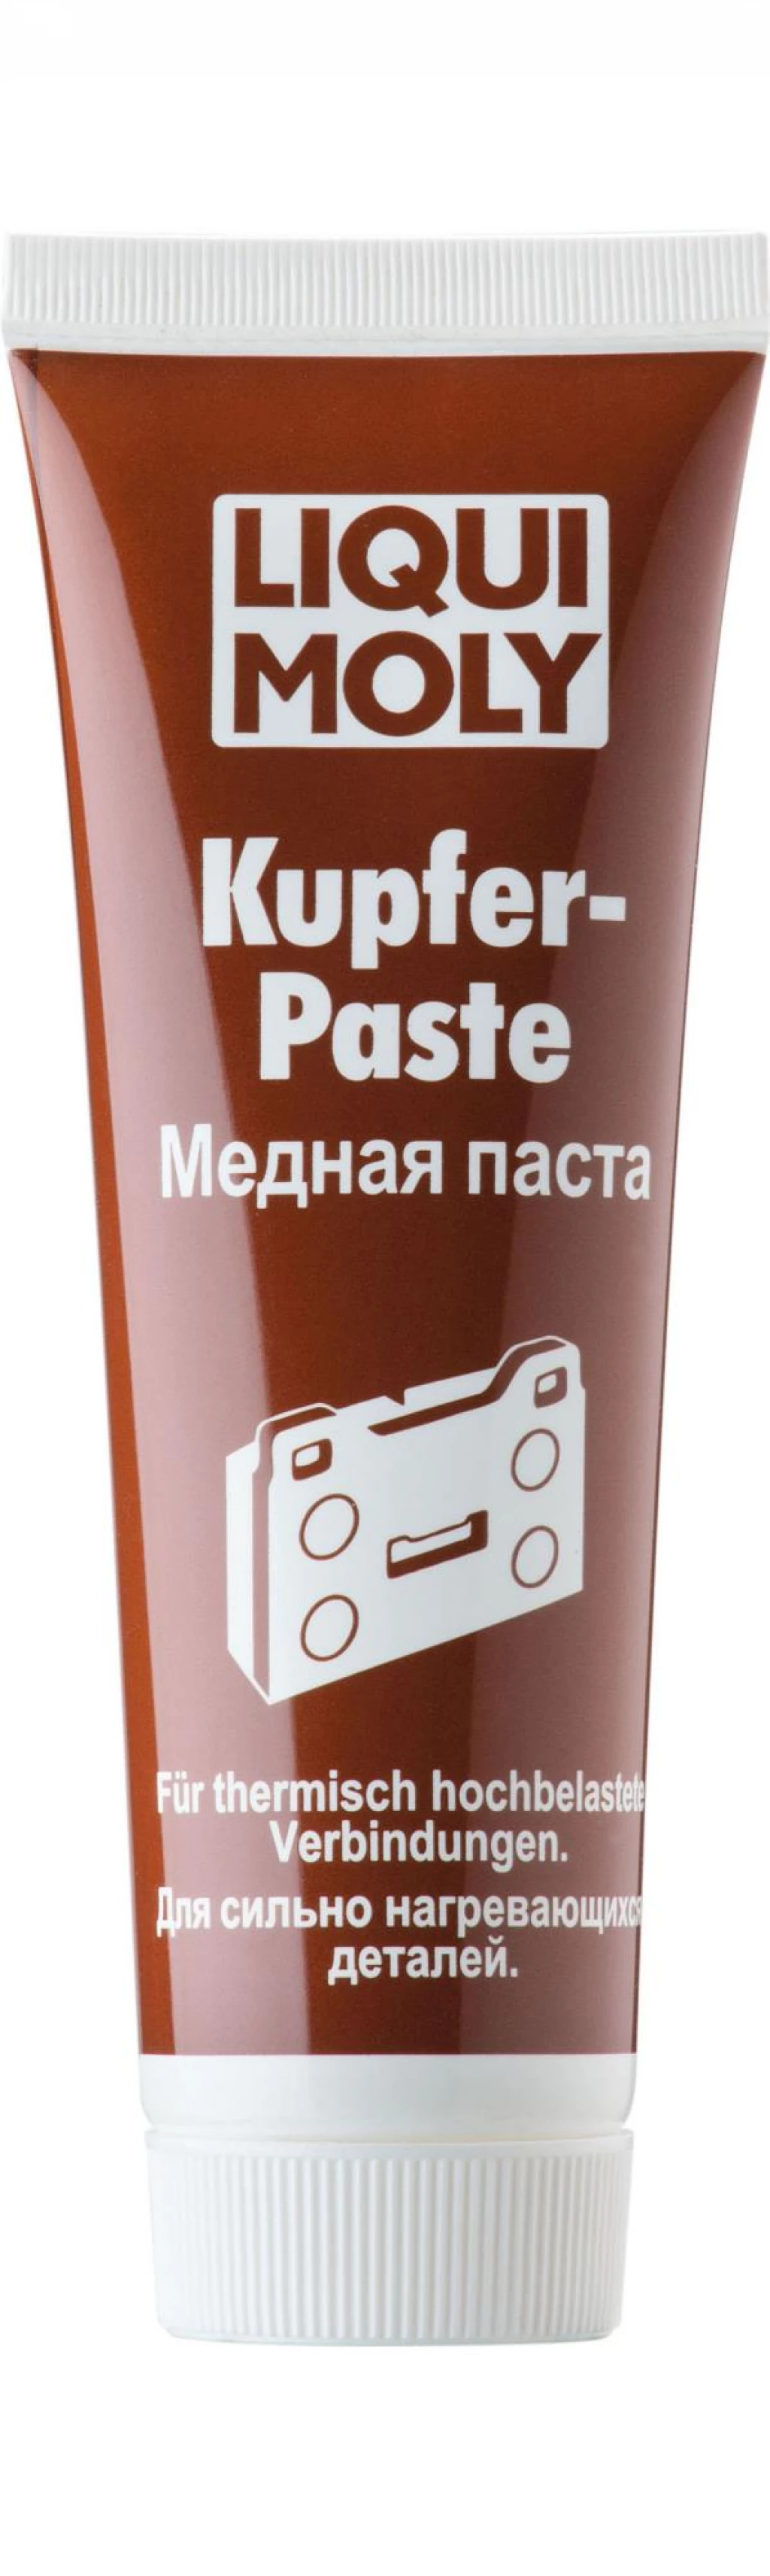 Медная паста Liqui Moly Kupfer-Paste 100 мл